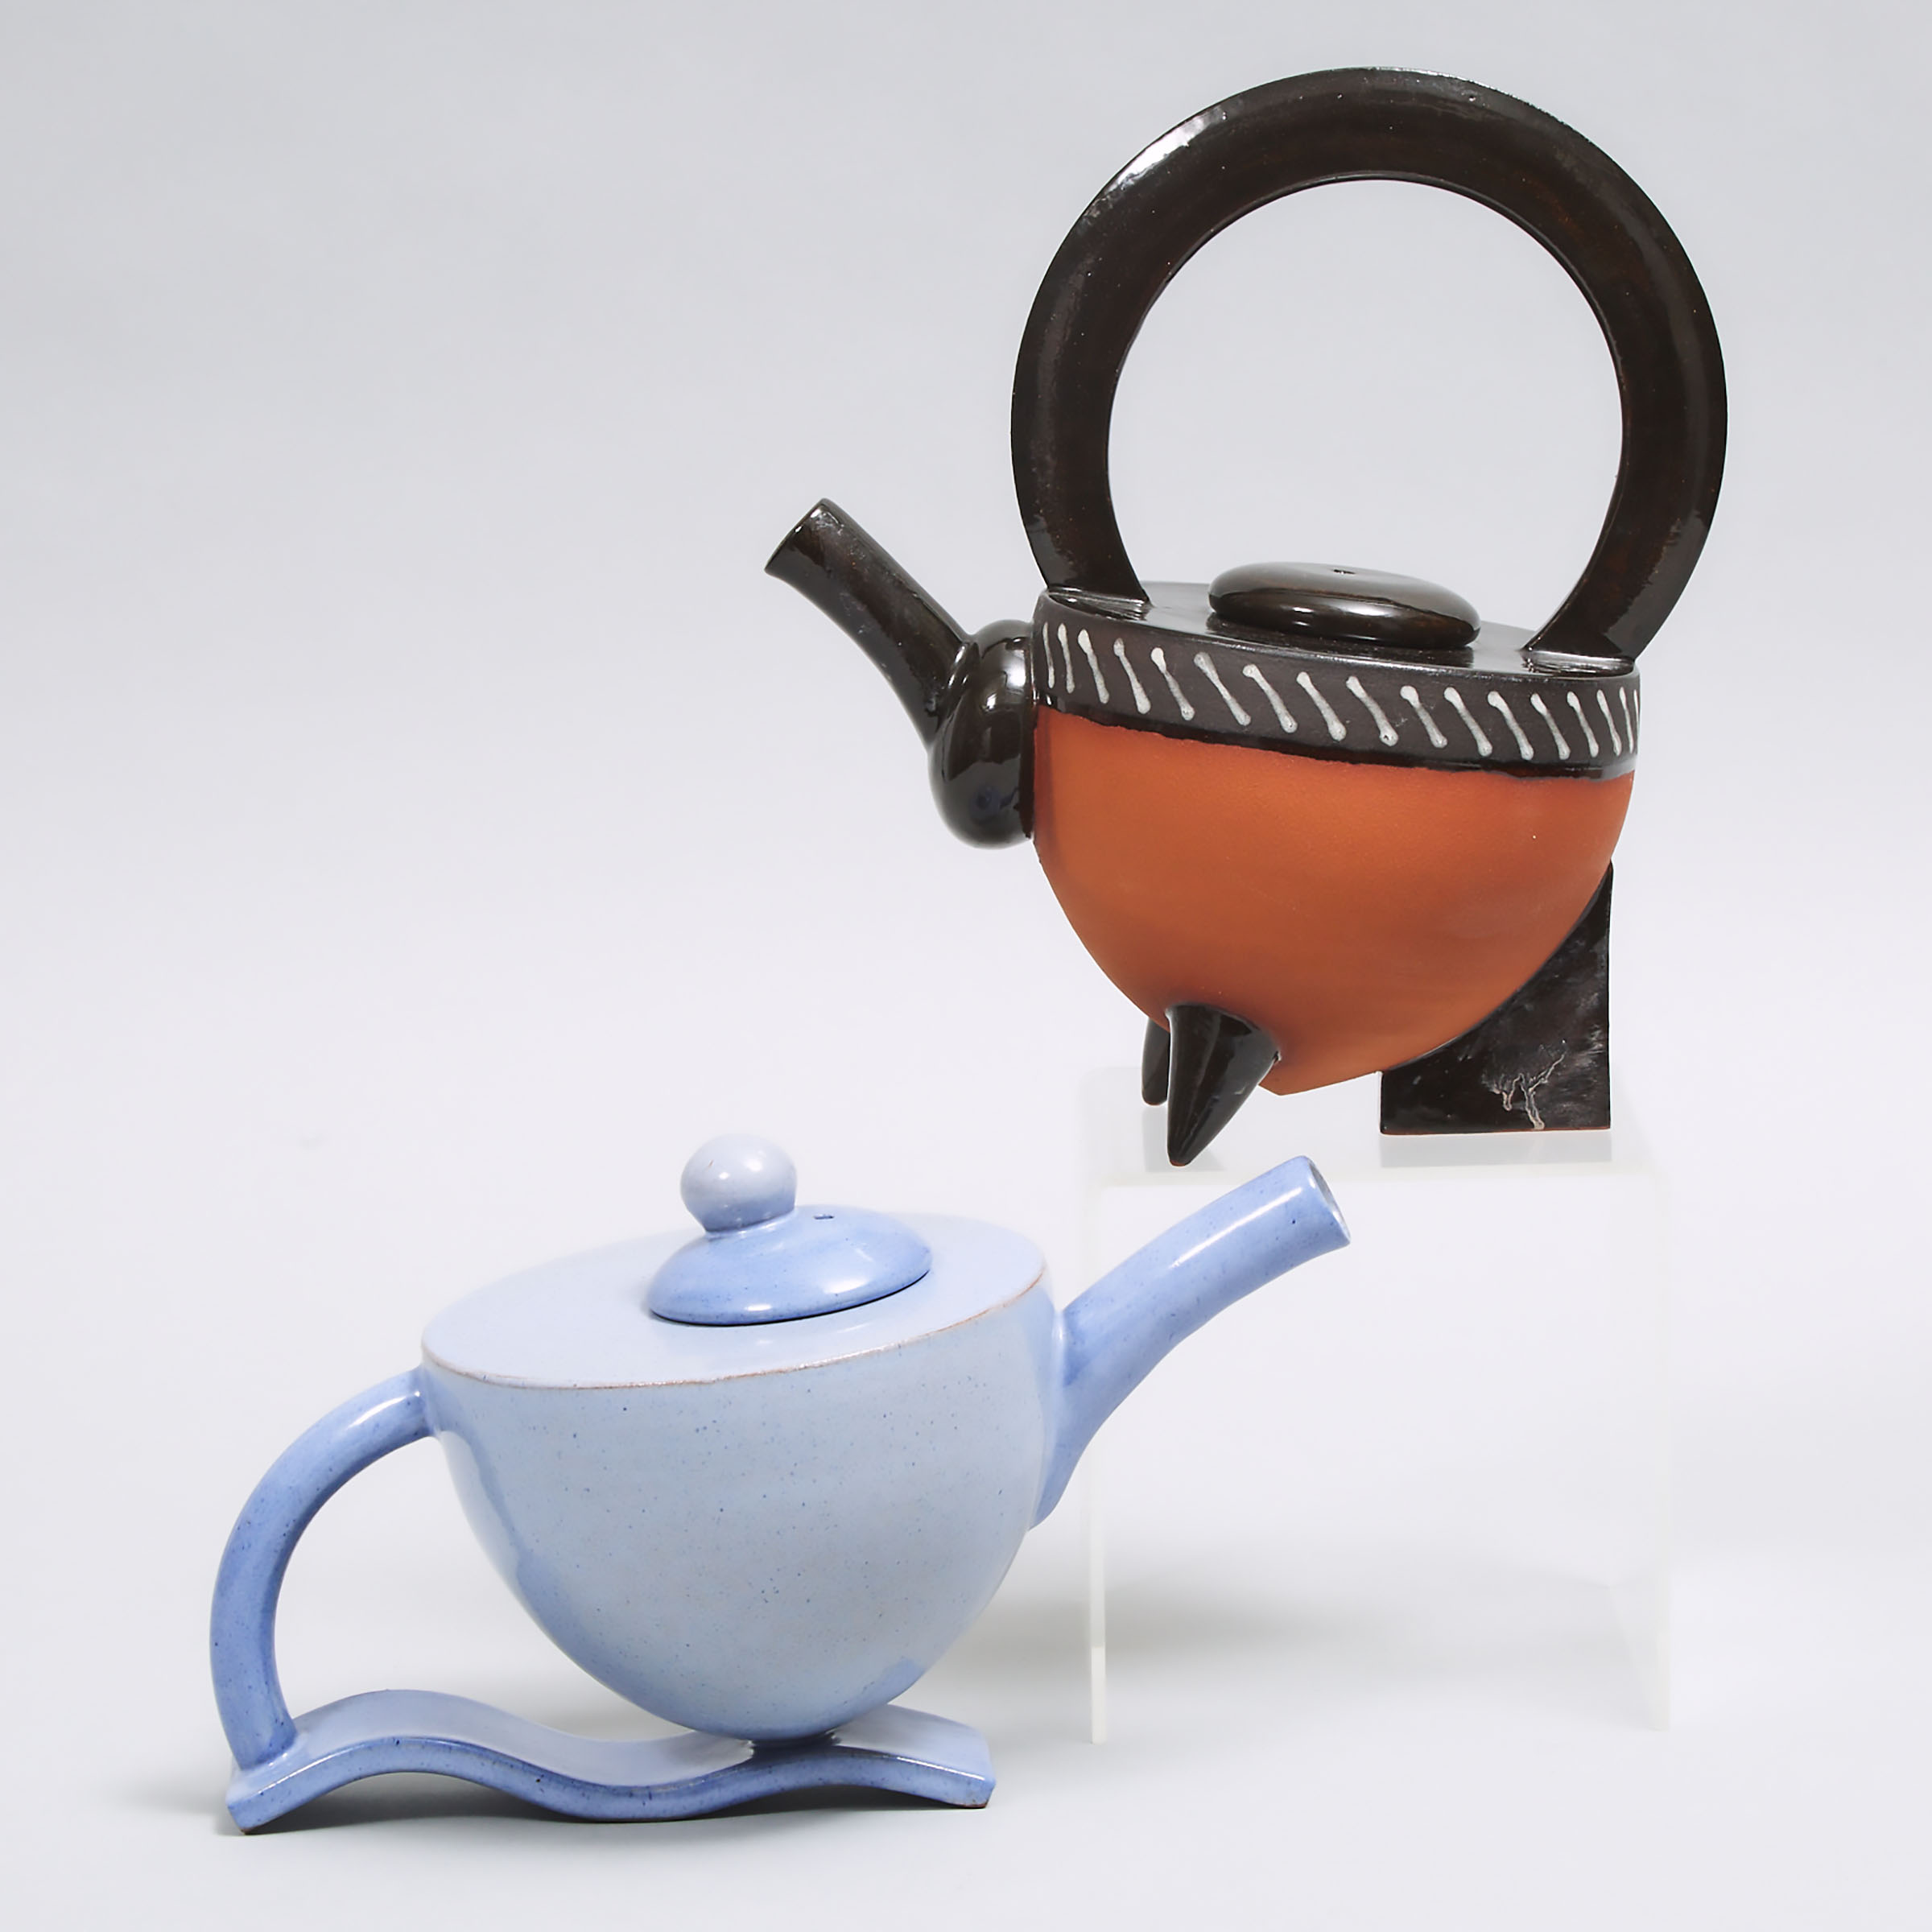 Richard Baxter (English), Two Teapots, 1990s